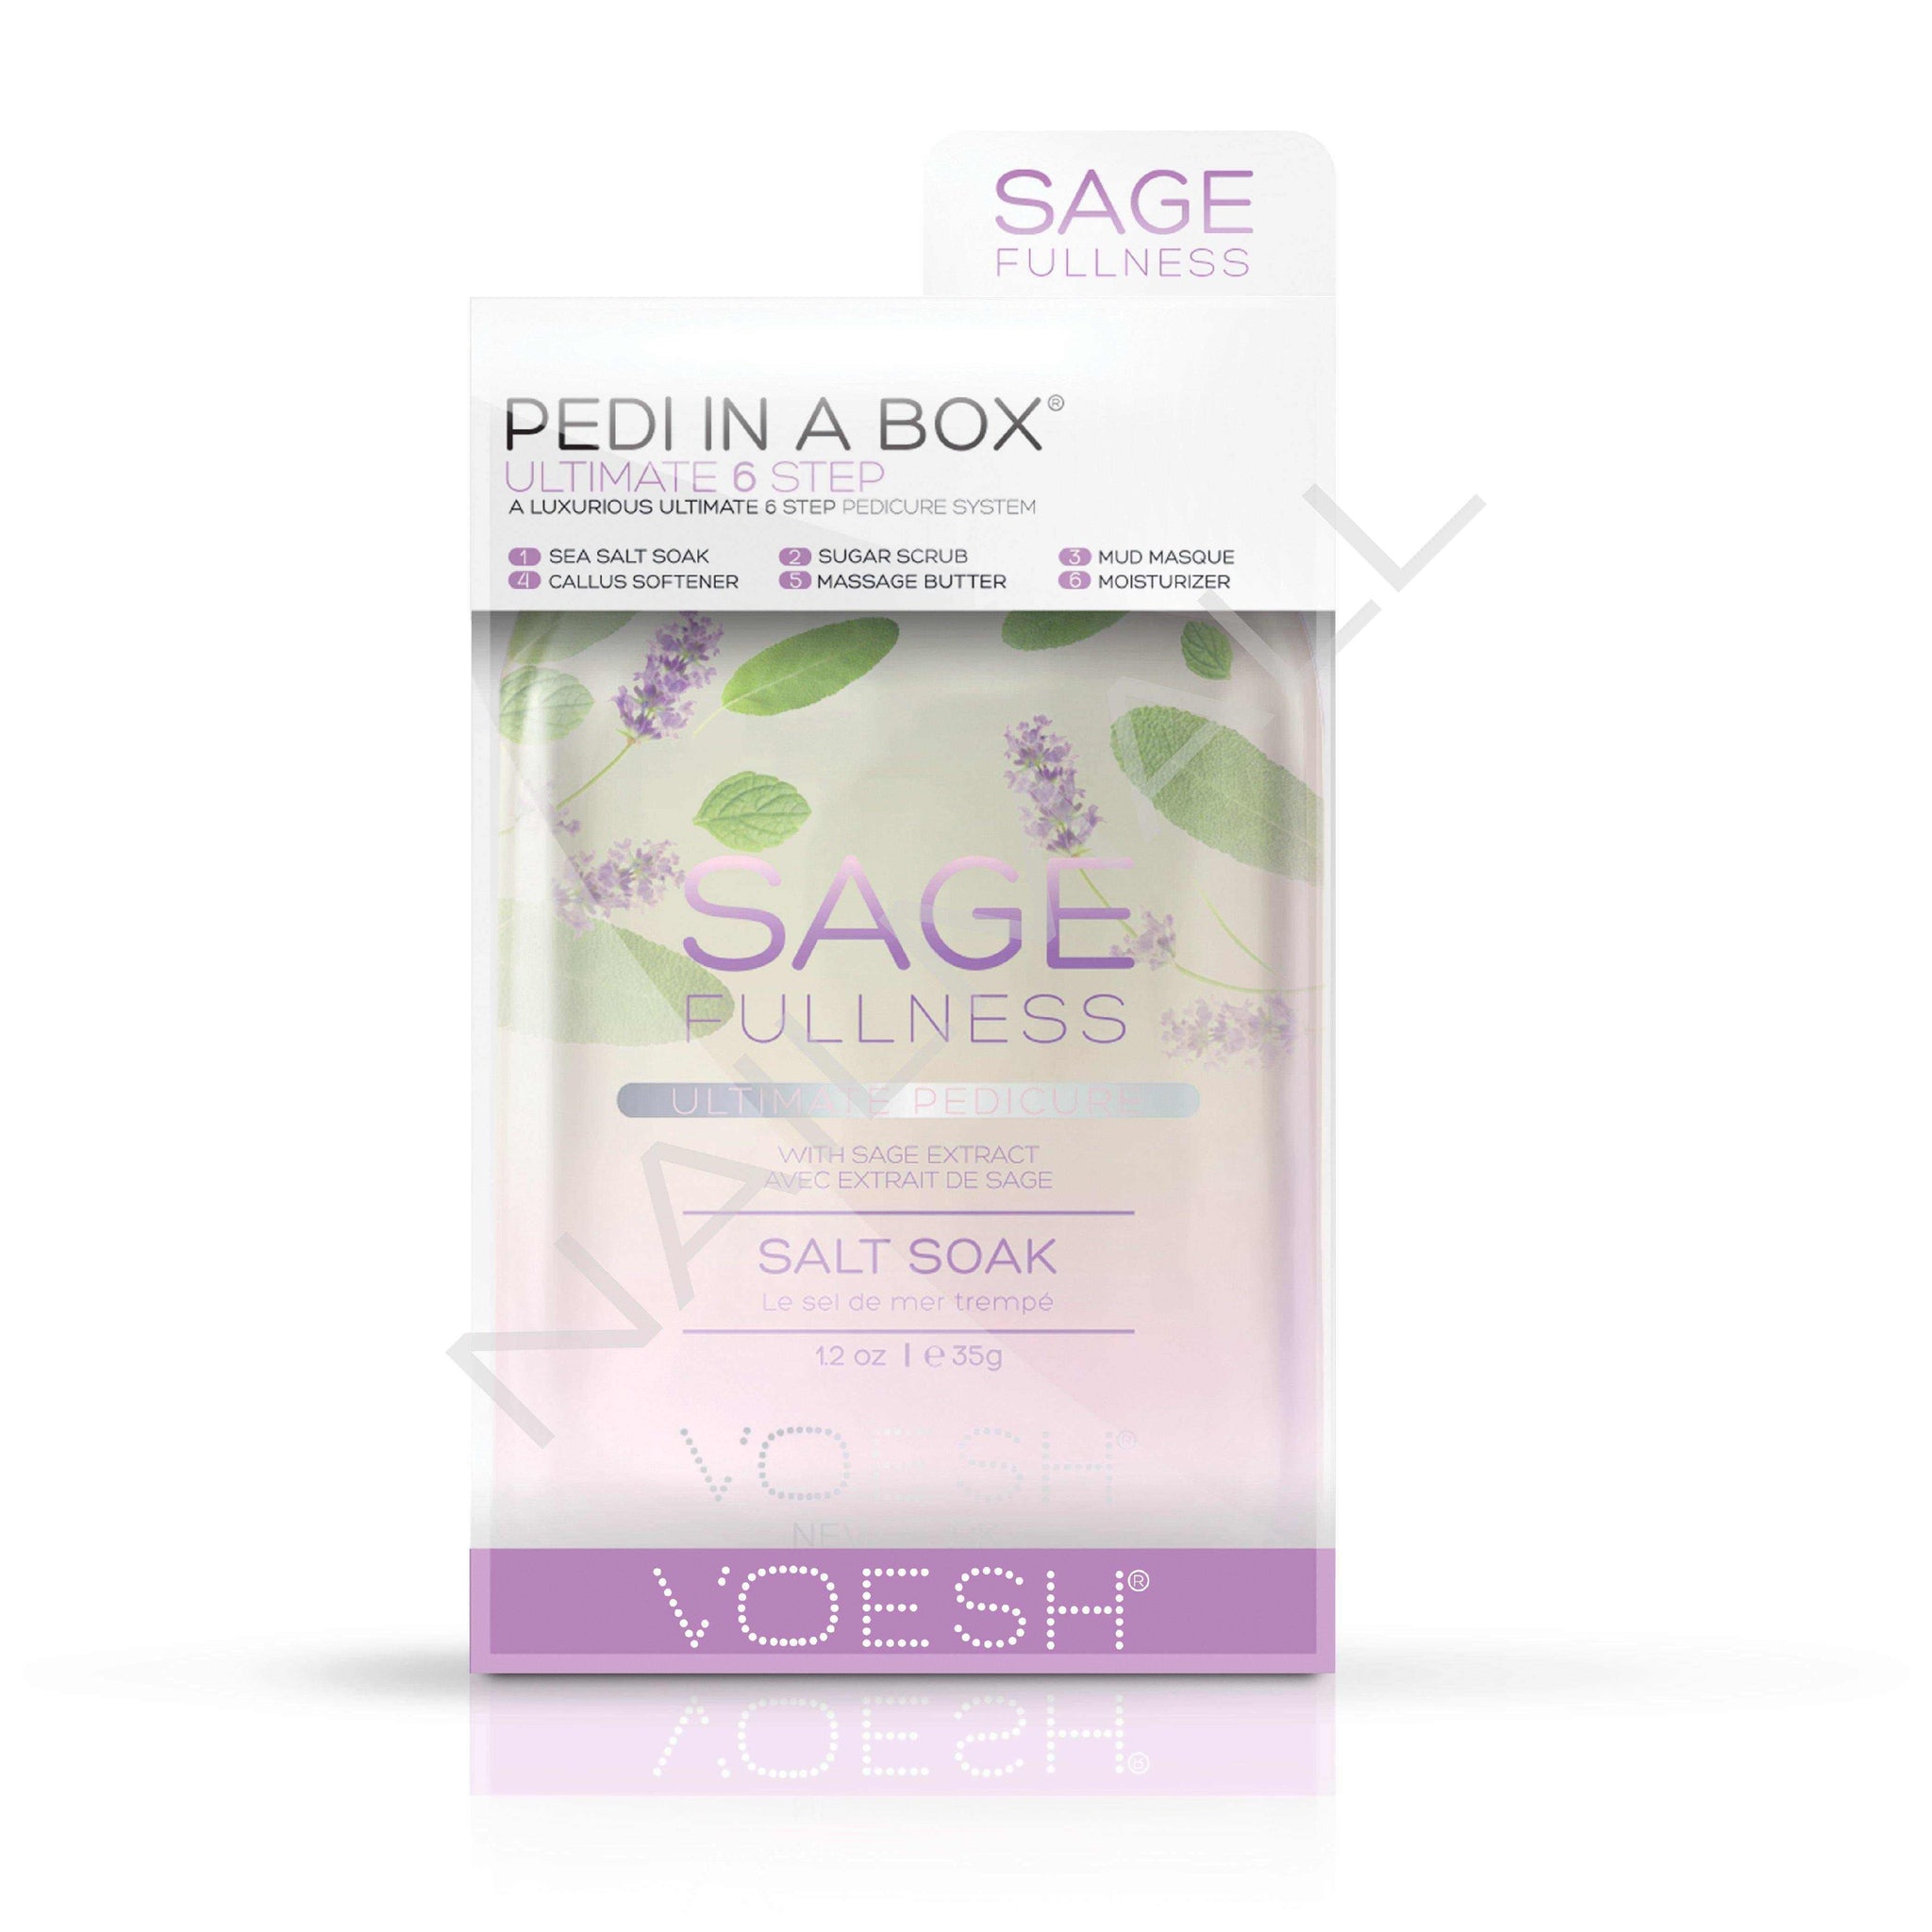 VOESH Pedi in a Box - Ultimate 6 Step Sage Fullness